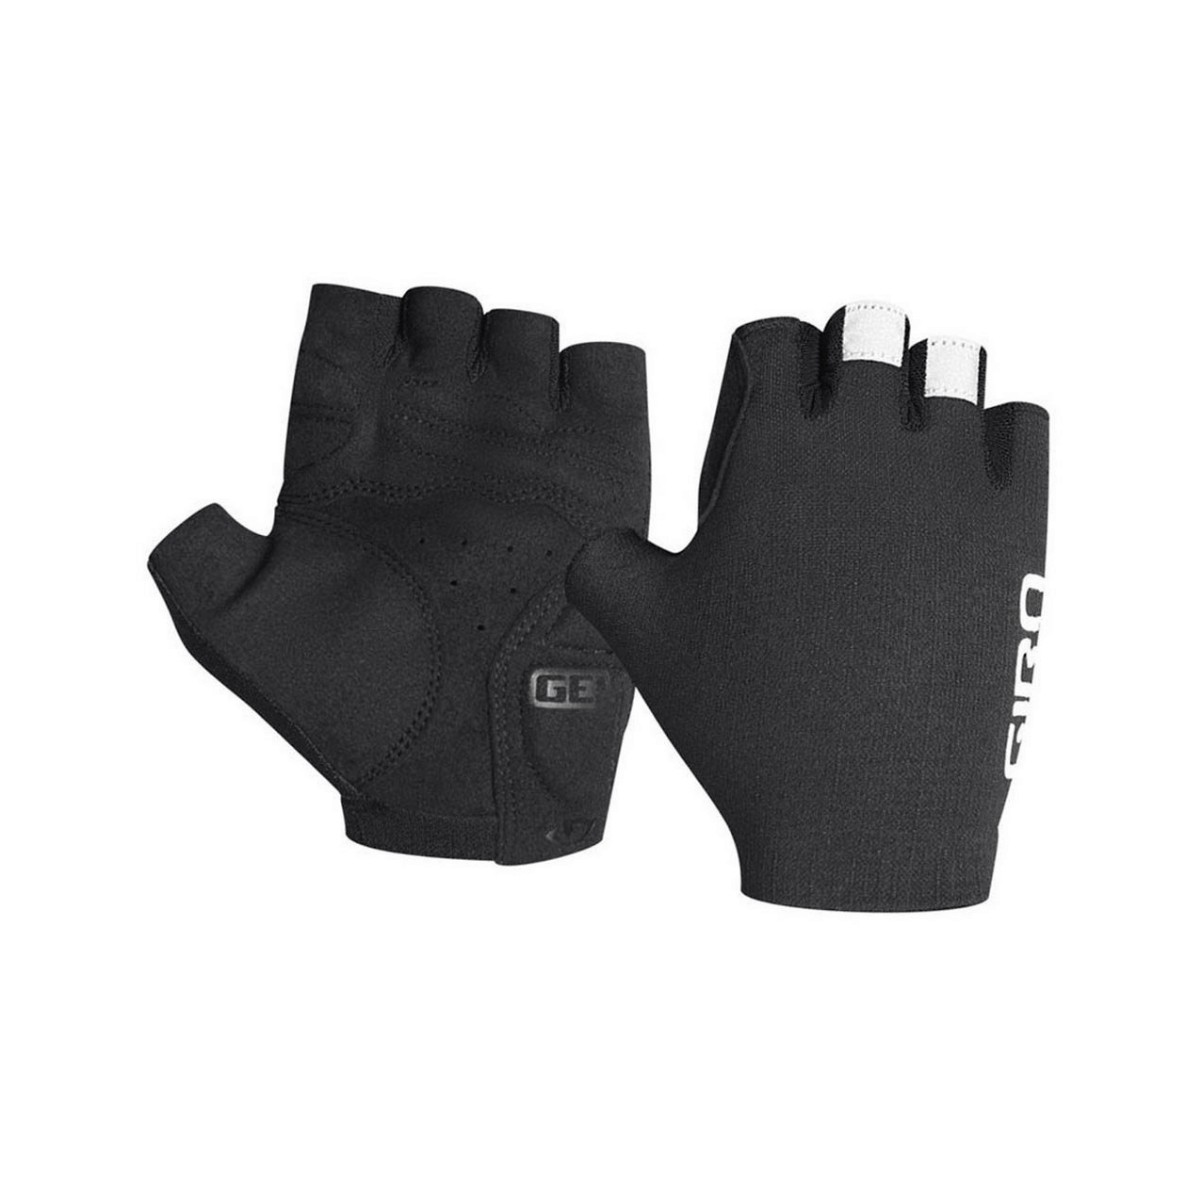 Gloves Giro Xnetic Road Short Black, Size M